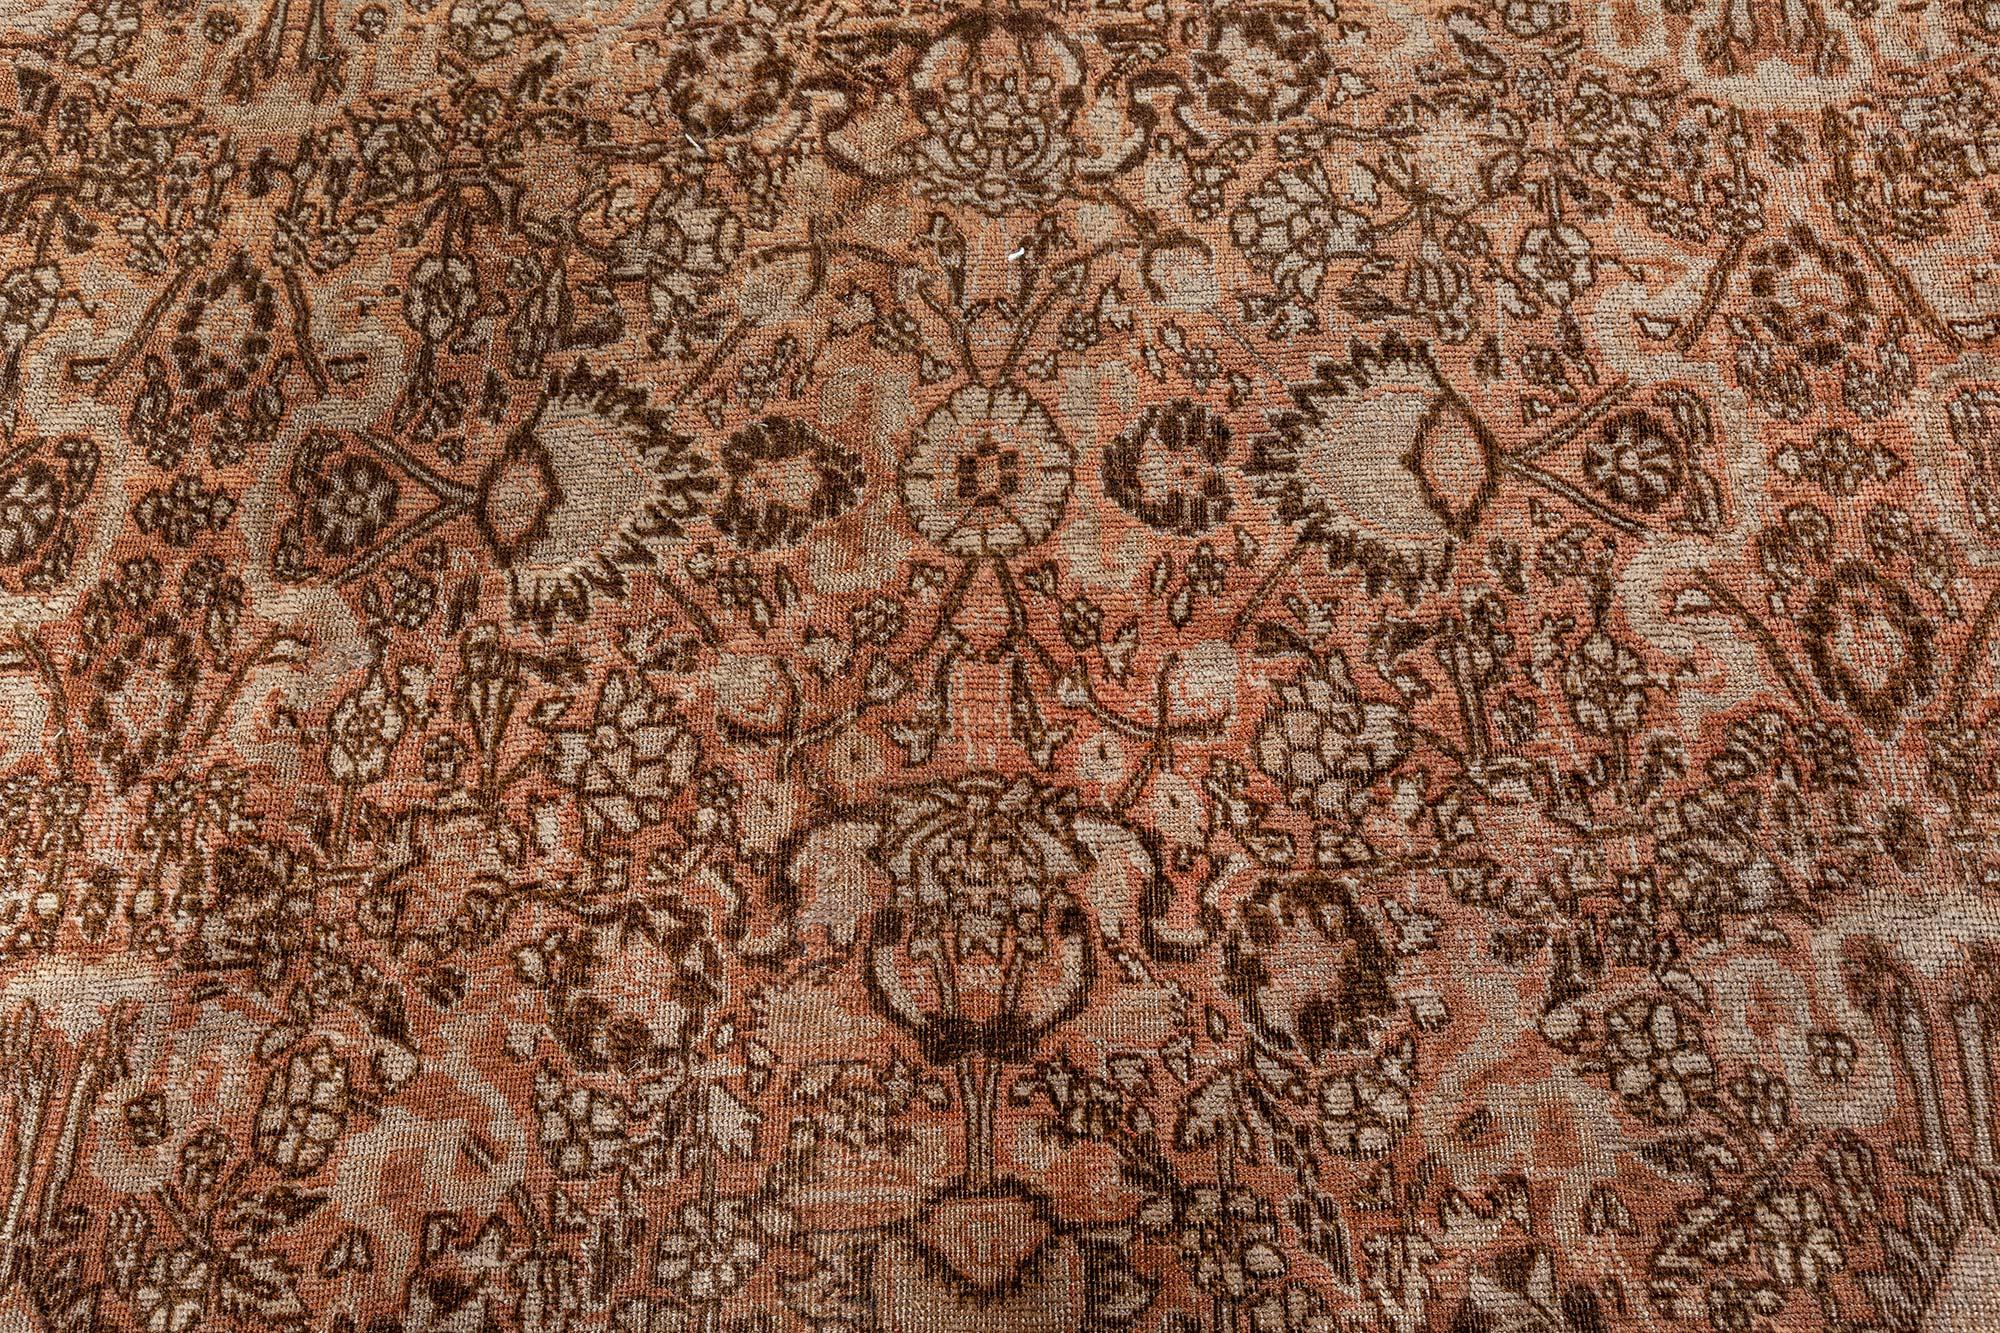 Antique Persian Tabriz rug.
Size: 9'2